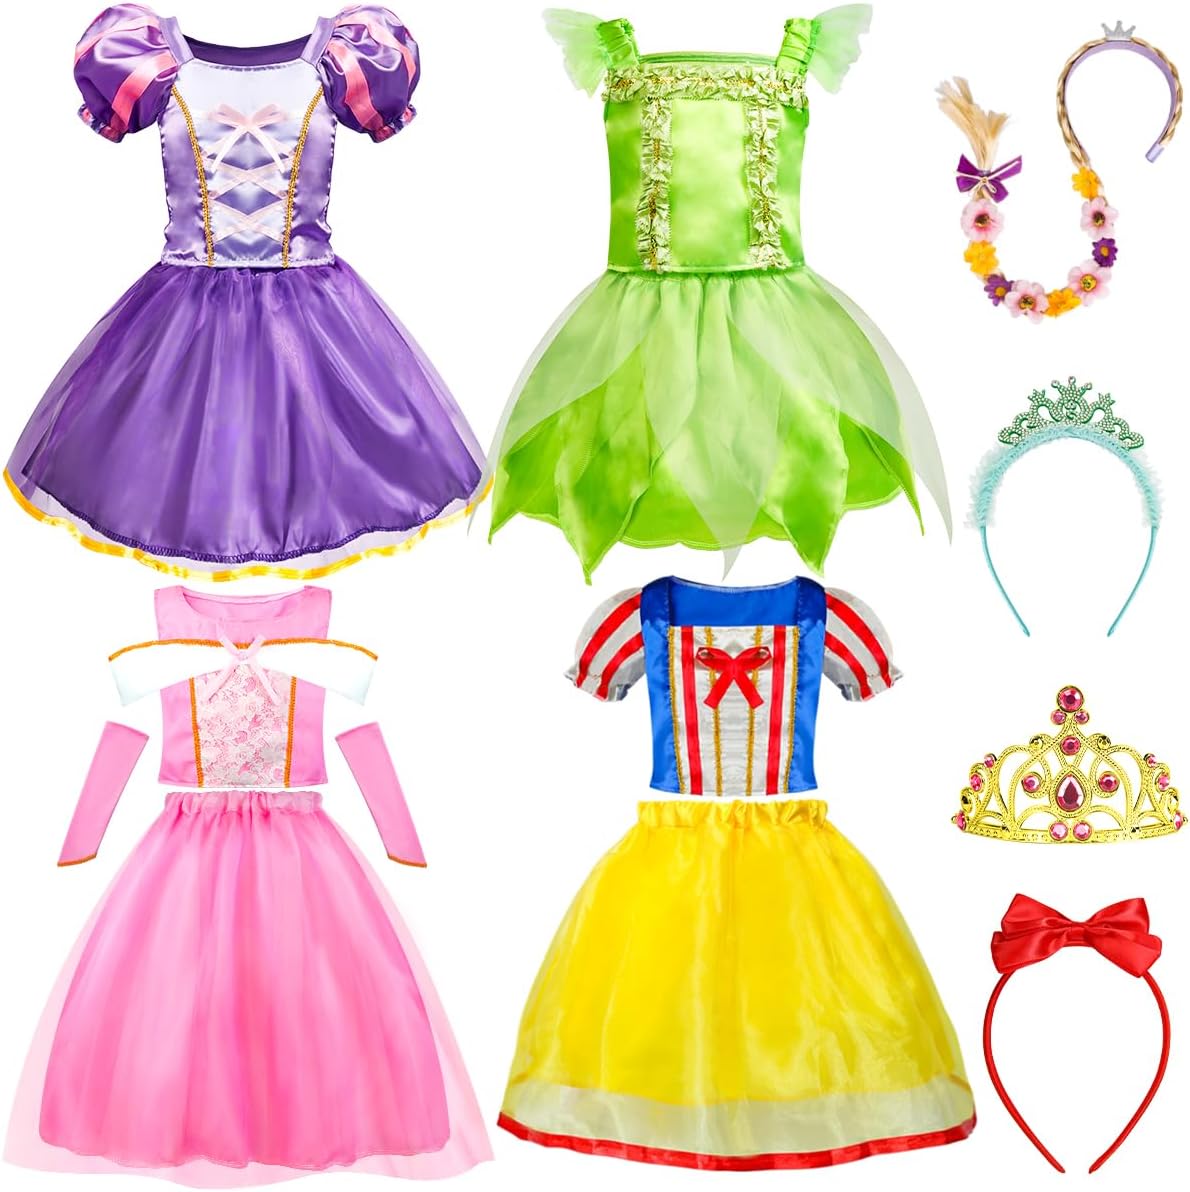 Princess Dress Up - Princess Dress for Girls Age 3-8 with Princess Toys